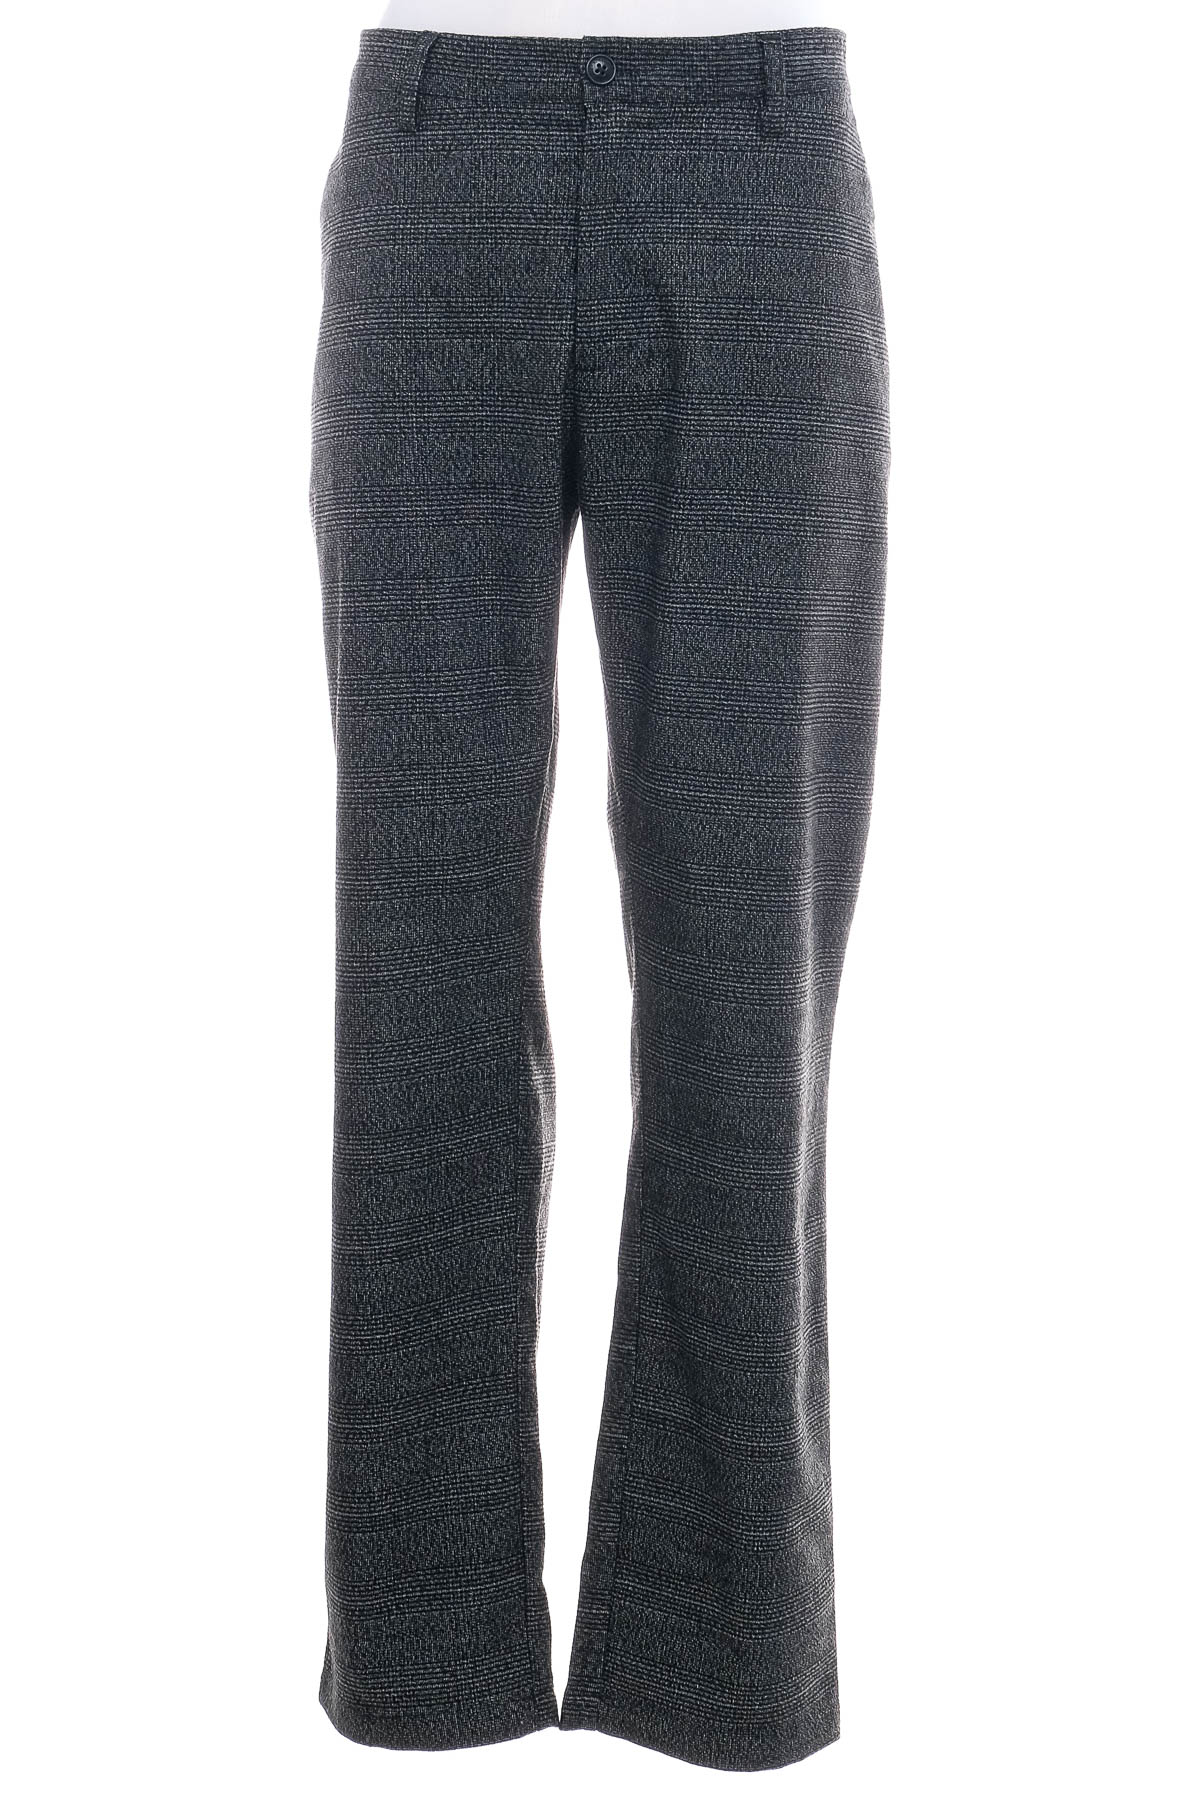 Pantalon pentru bărbați - QUARTERBACK by jbc - 0